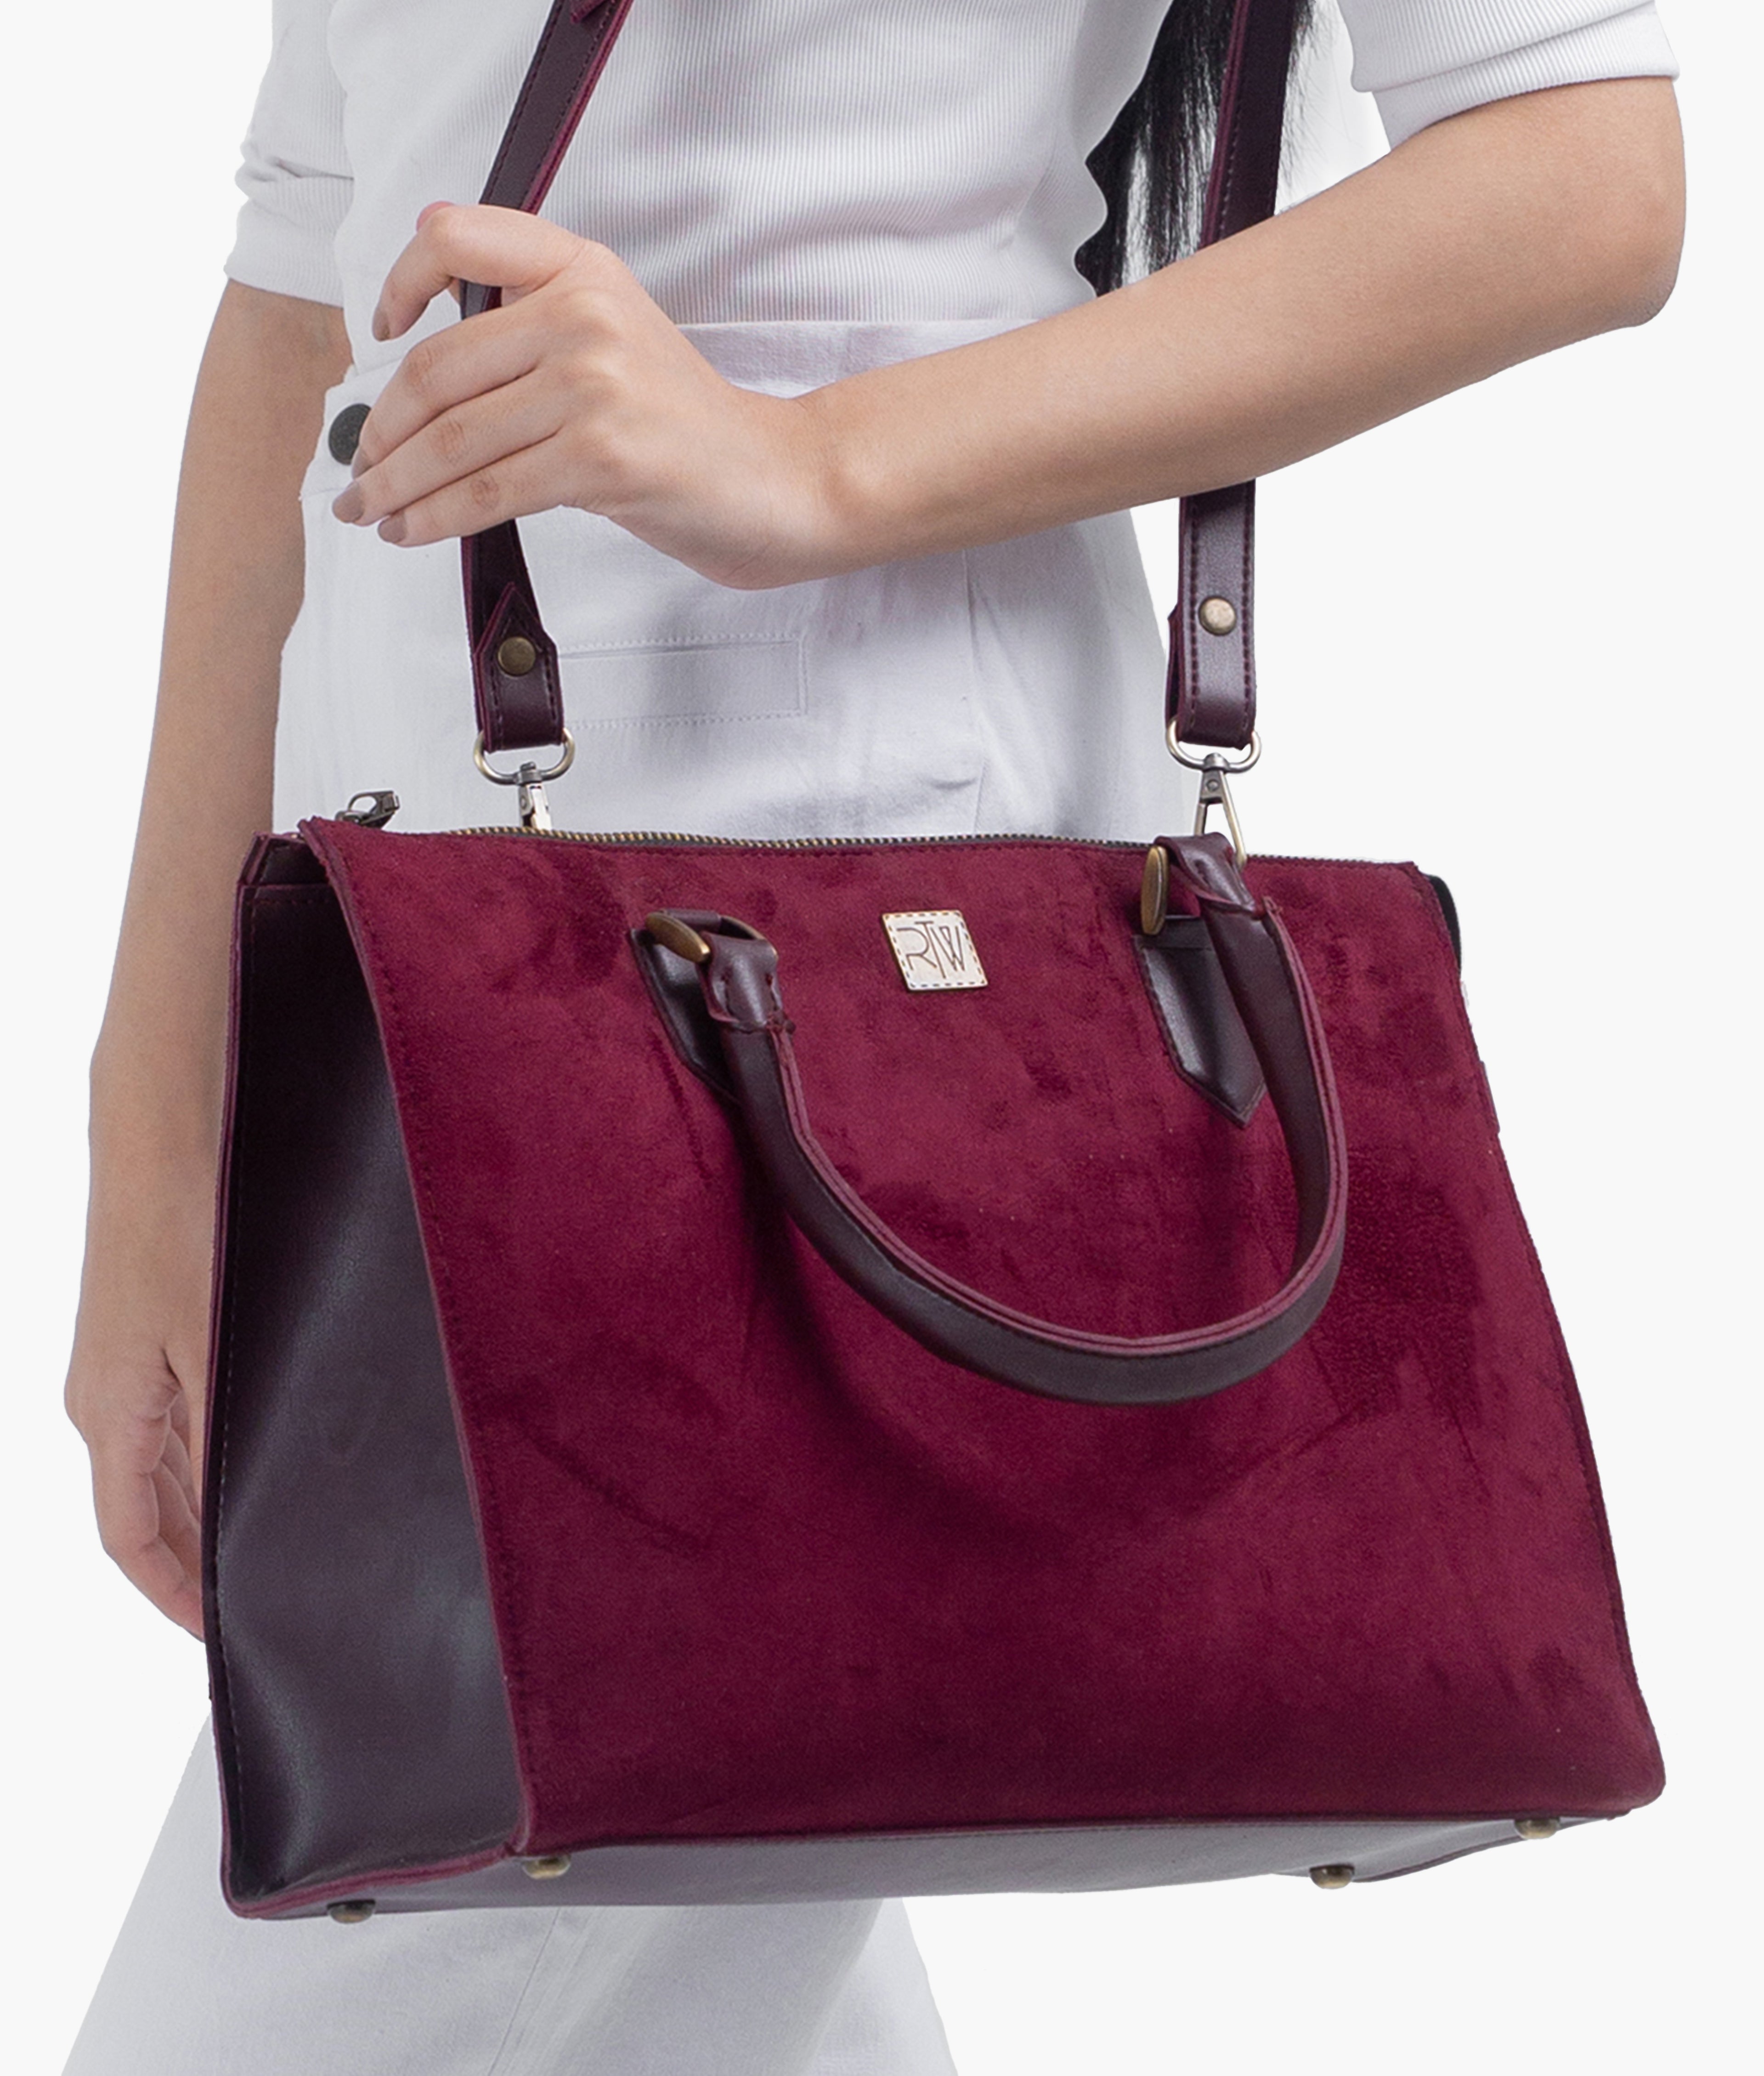 Burgundy suede workplace handbag